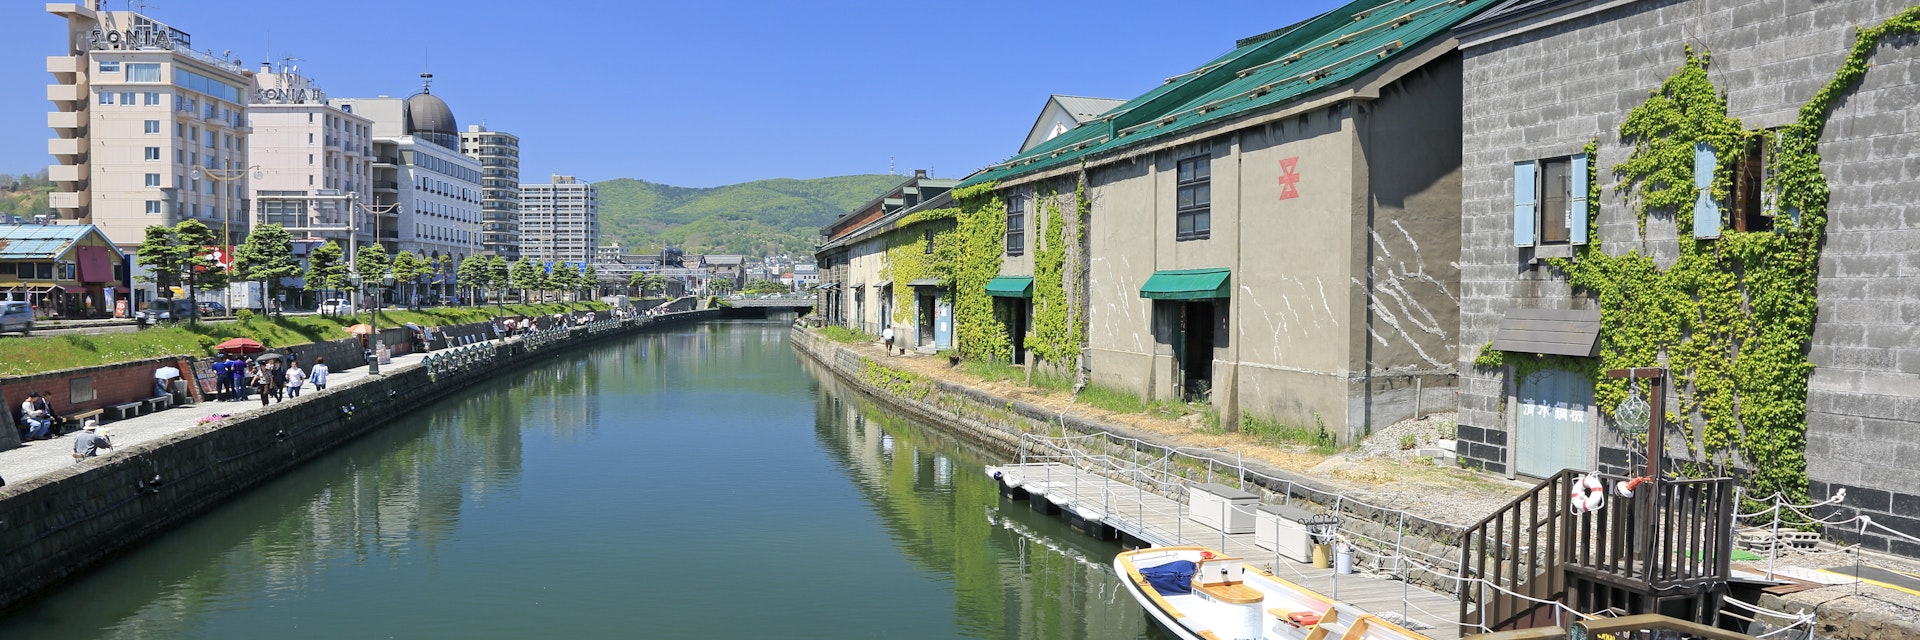 Japan, Hokkaido, Otaru-shi, Otaru Canal (Photo by: JTB Photo/UIG via Getty Images)